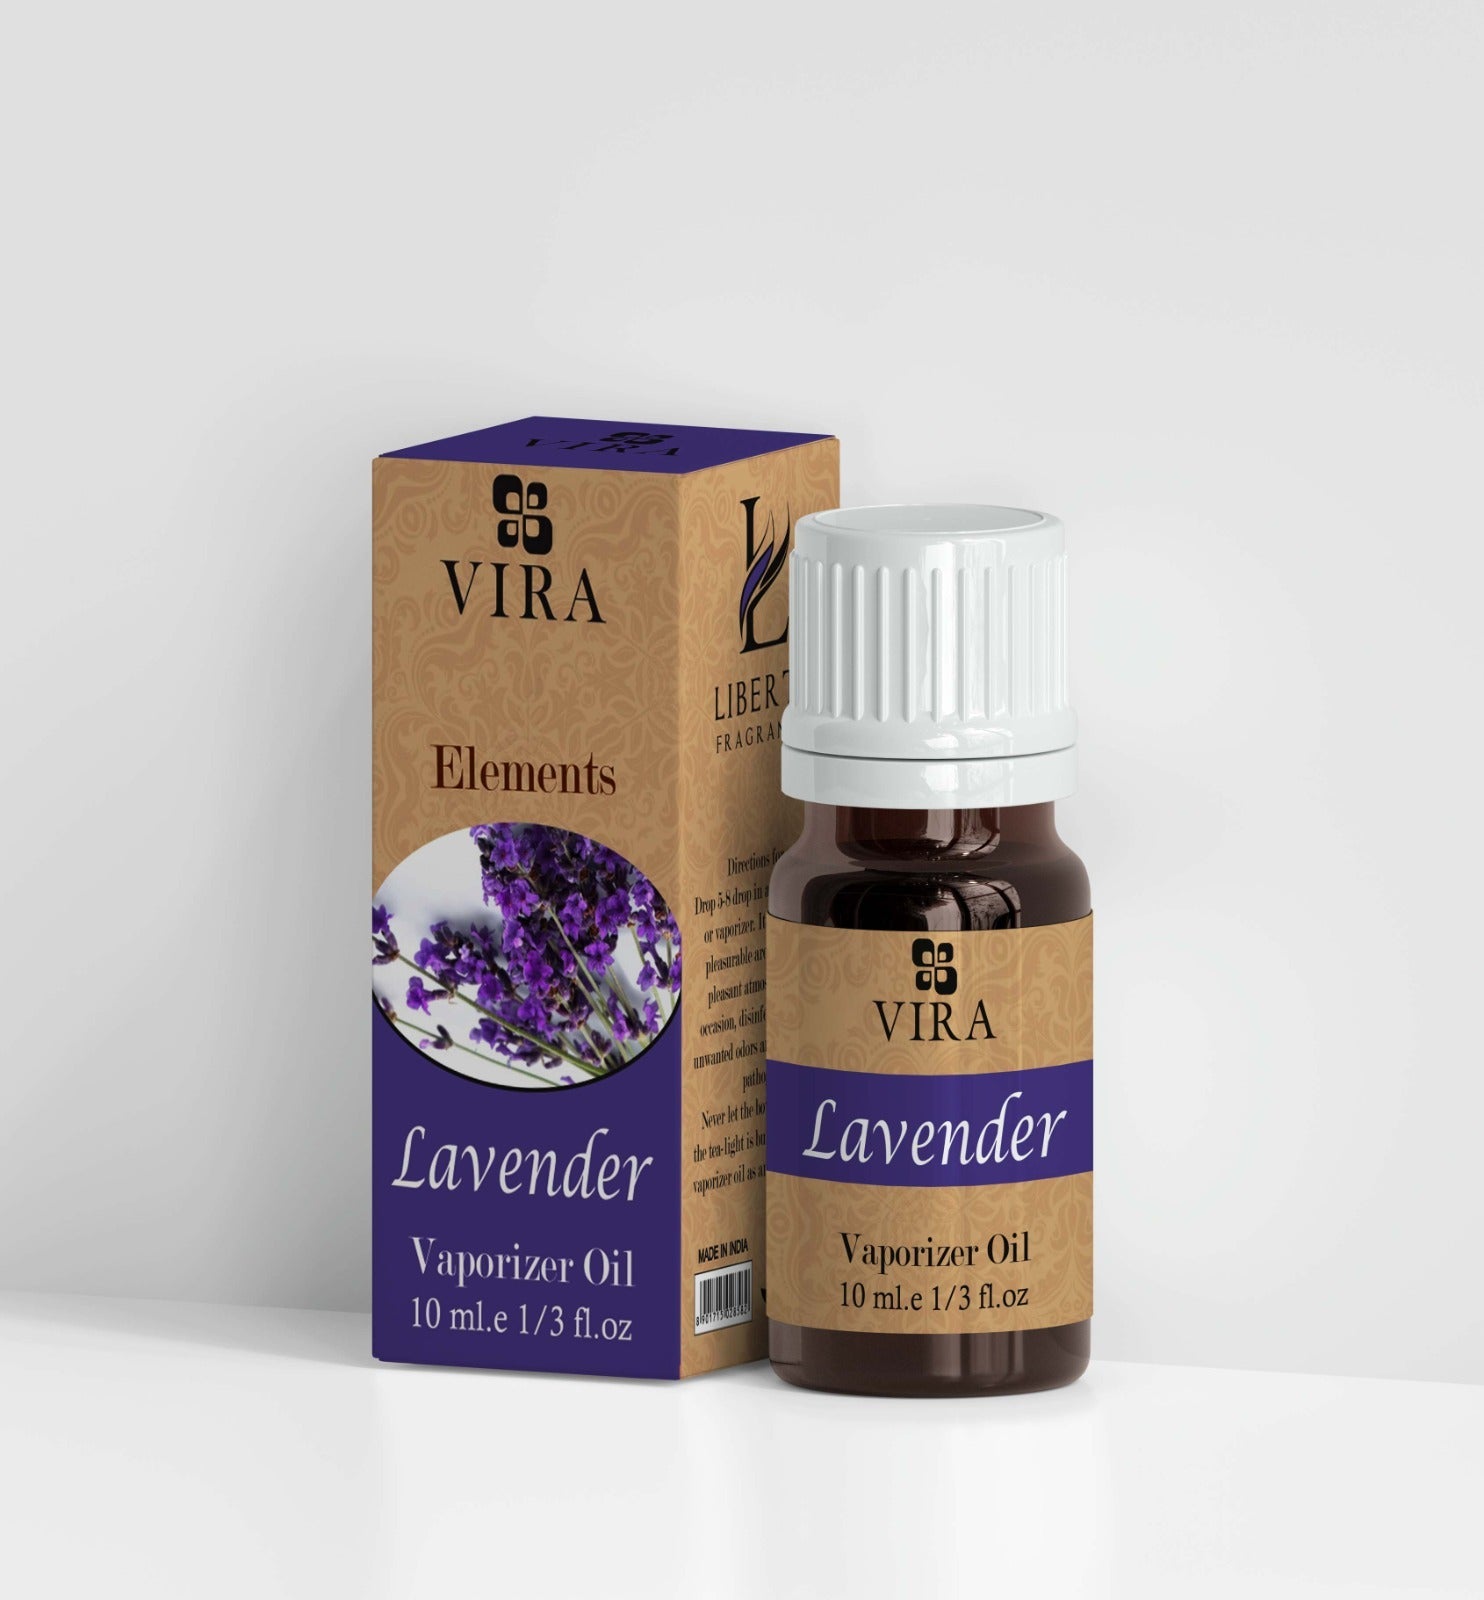 Lavender - Elements collection vaporizer oil by Vira - scentingsecrets